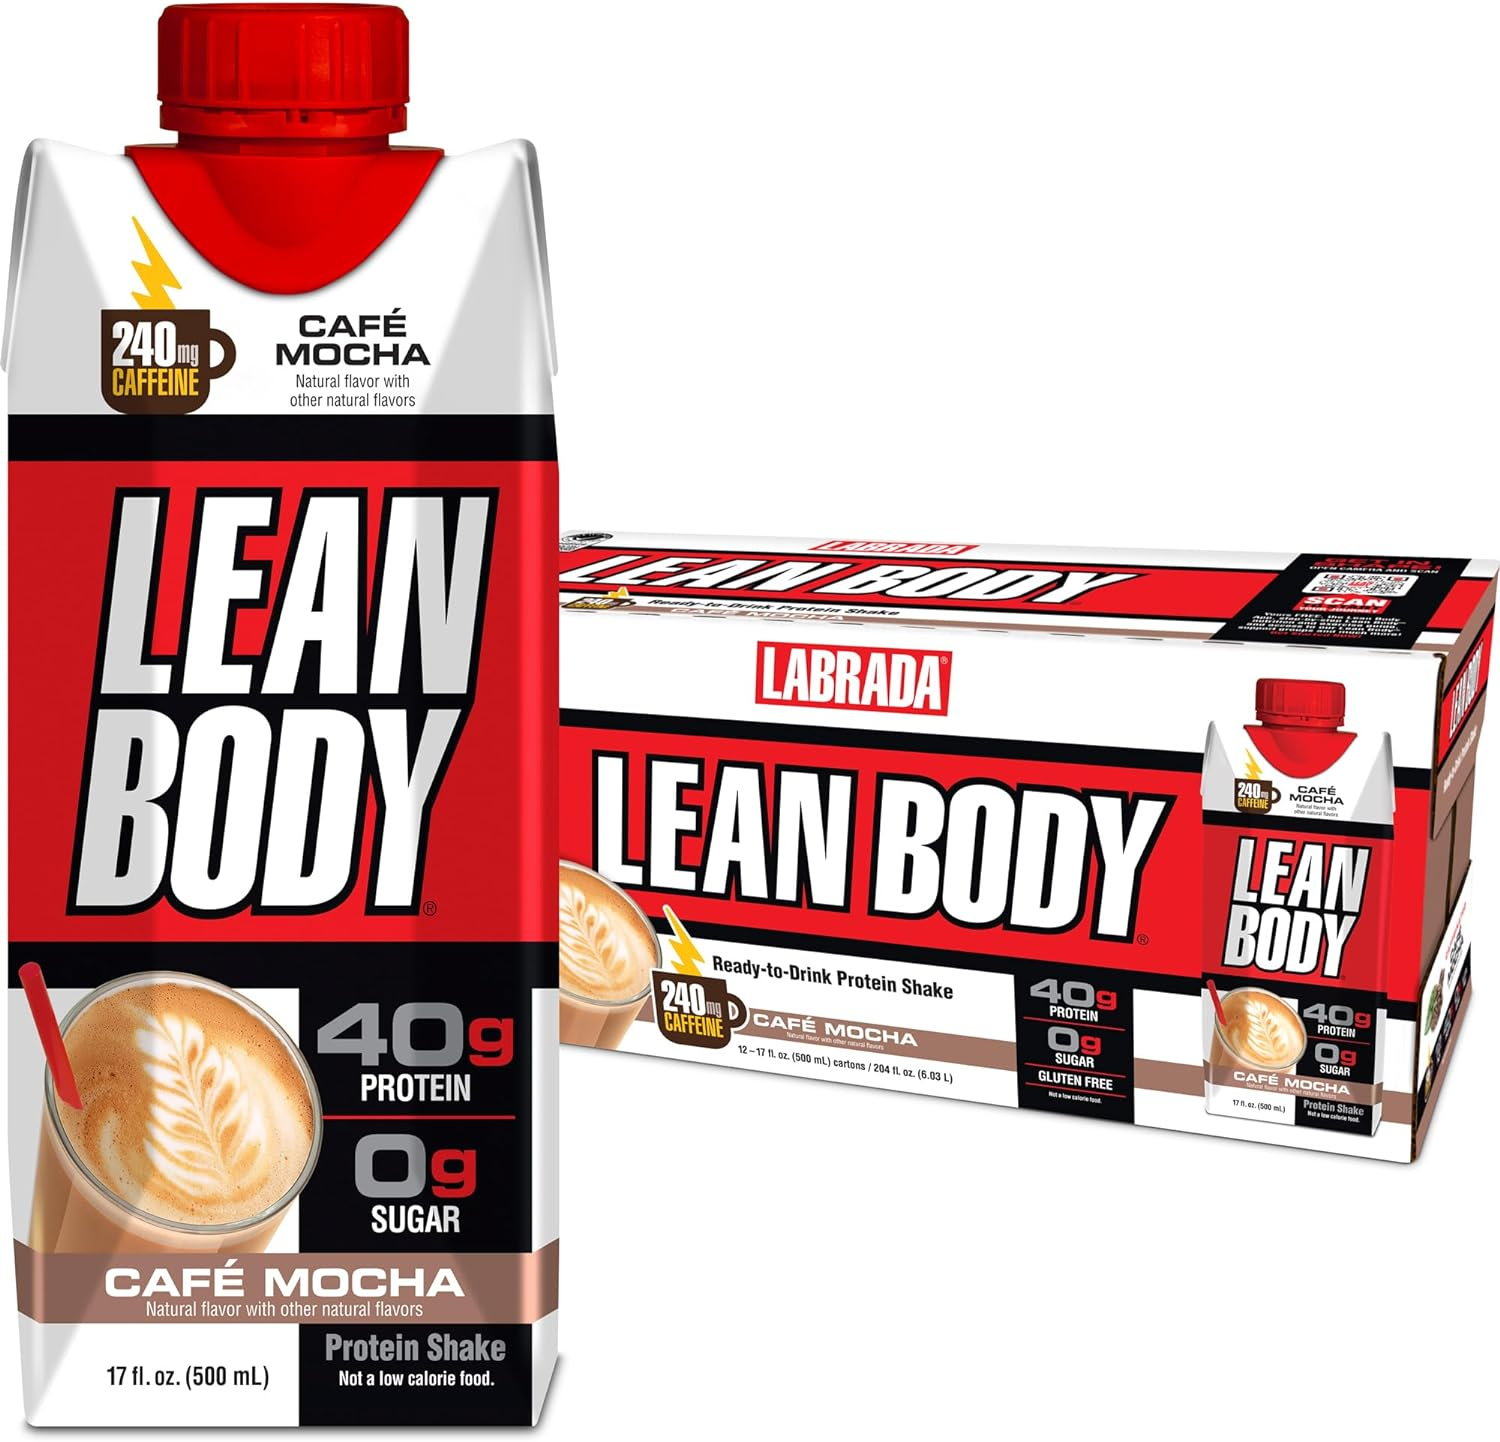 Lean Body Ready-to-Drink Café Mocha Protein Shake, 240mg Caffeine, 40g Protein, Whey Blend, 0 Sugar, Gluten Free, 22 Vitamins & Minerals, $29.90 as low as $25.70